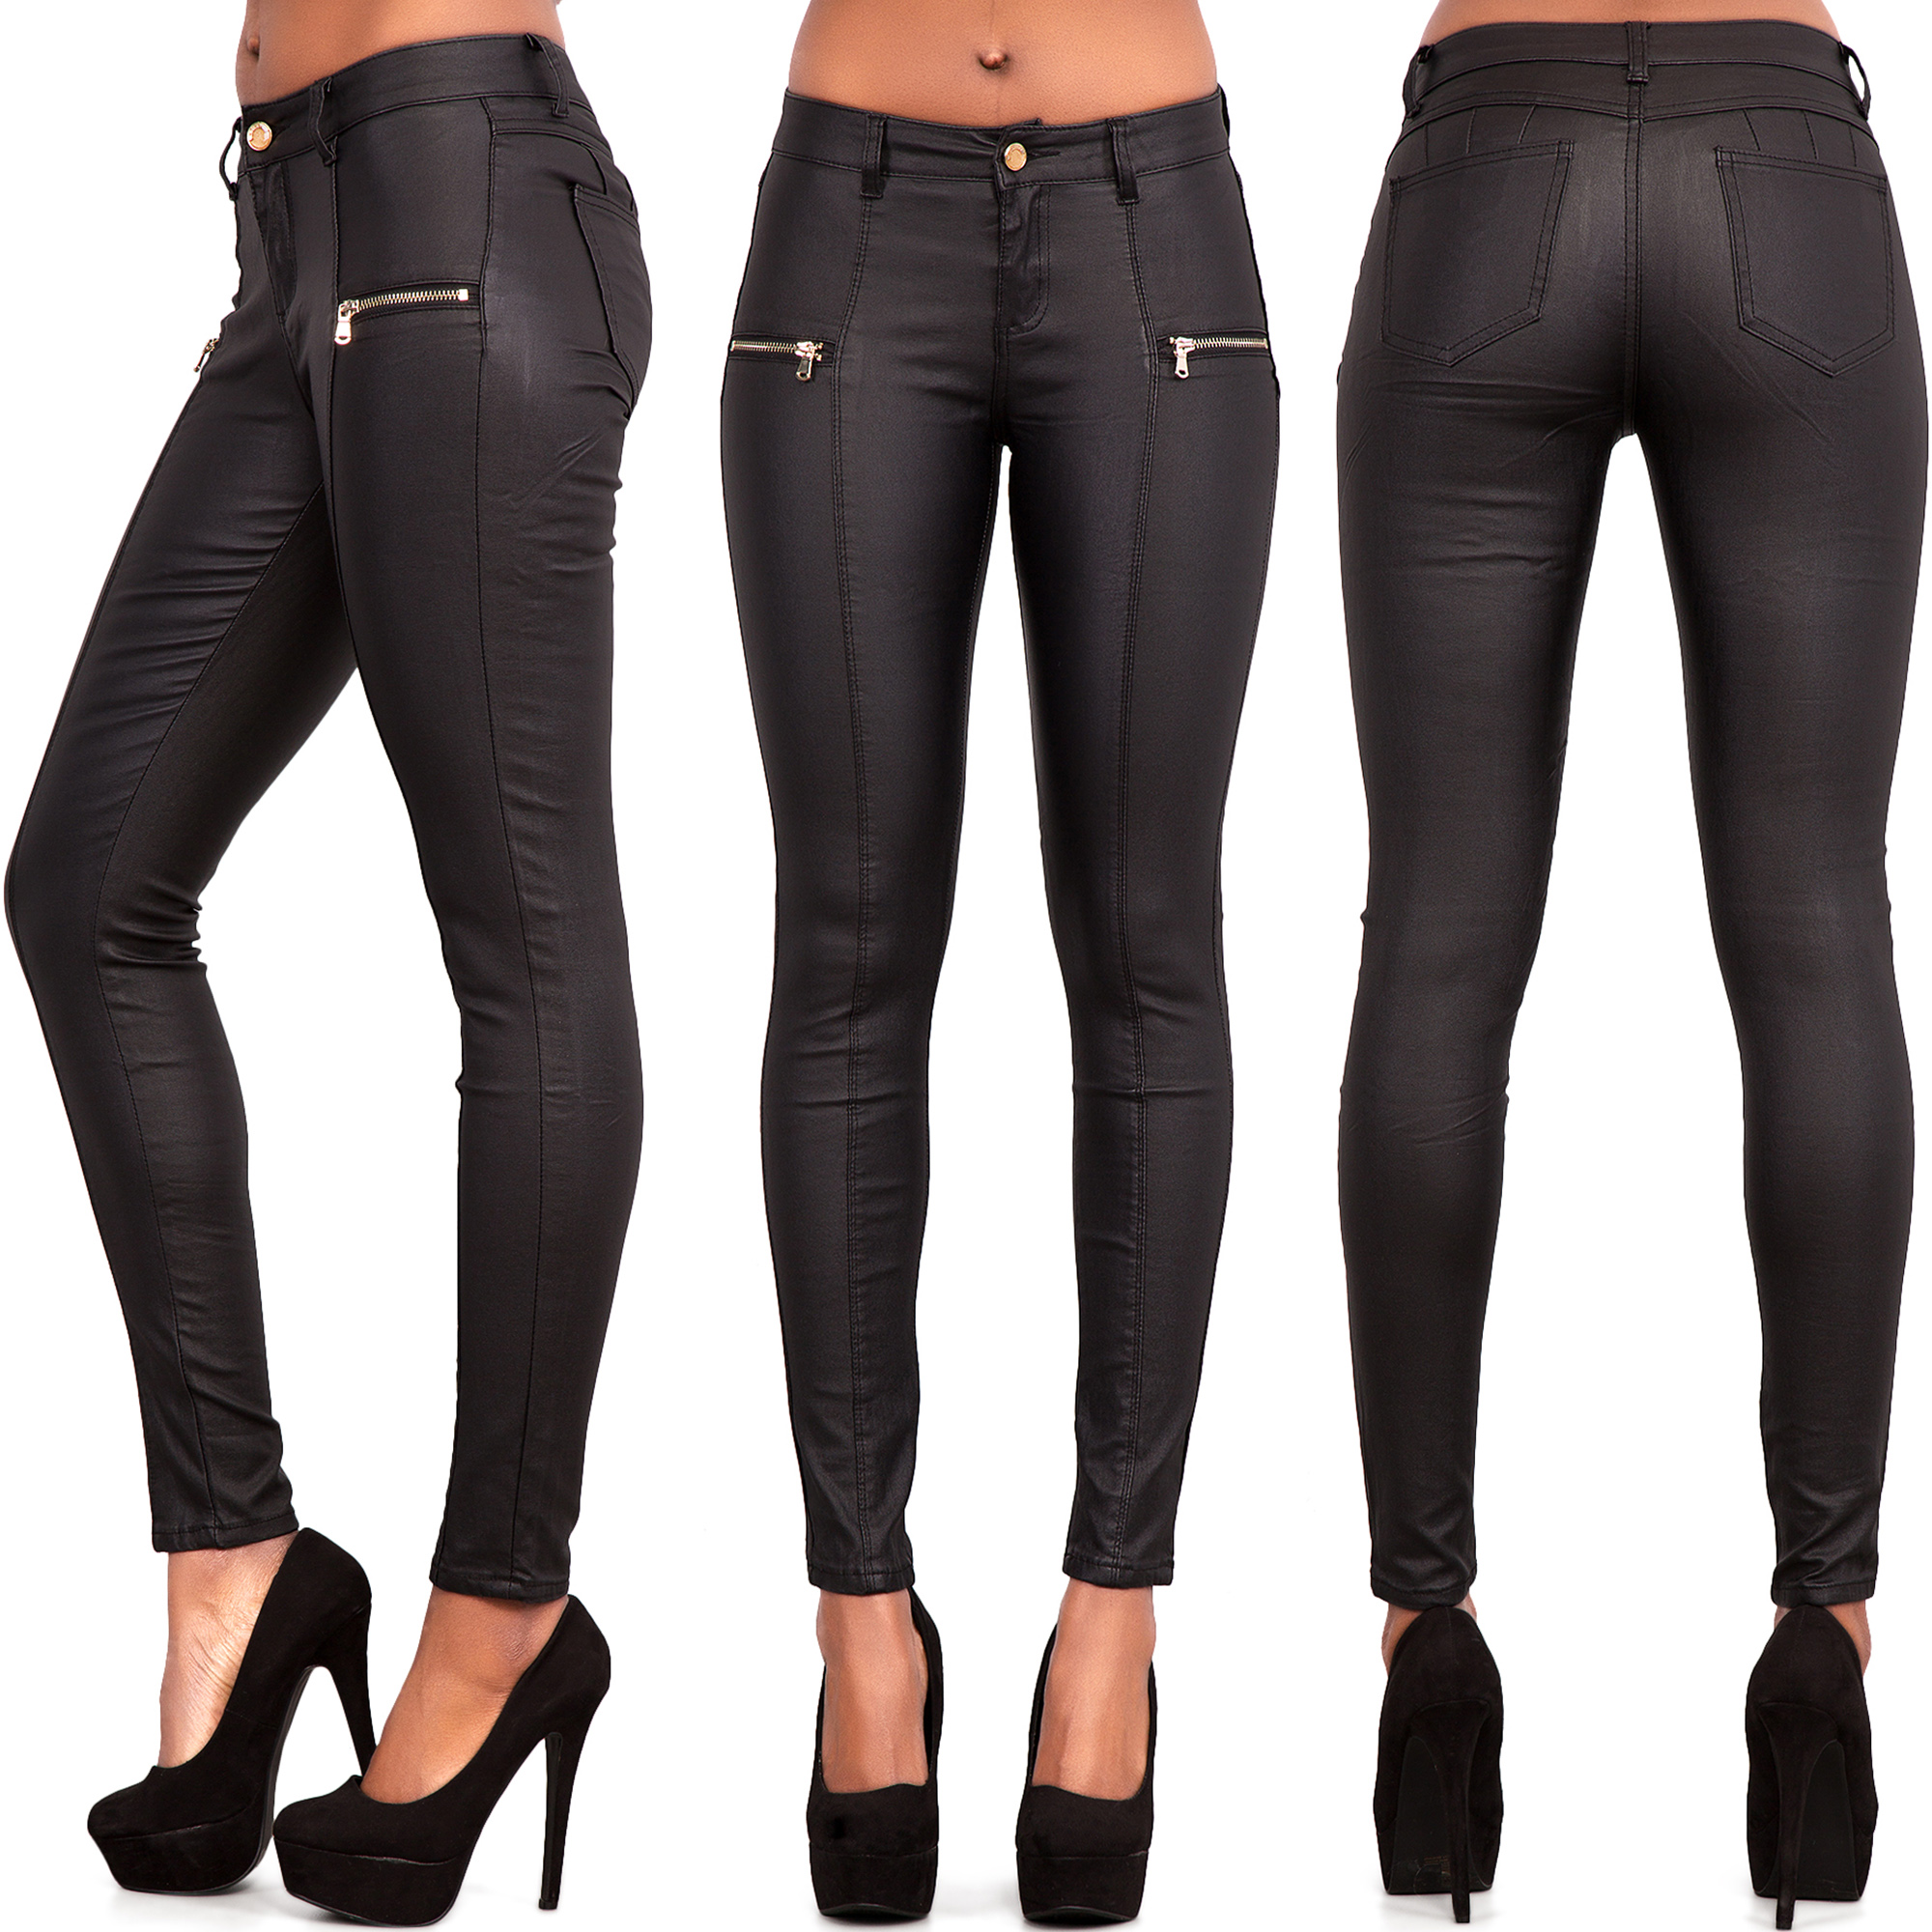 Womens Black Wet Look Leather Jeans Skinny Trouser Leggings Size 6 8 10 12 14 Ebay